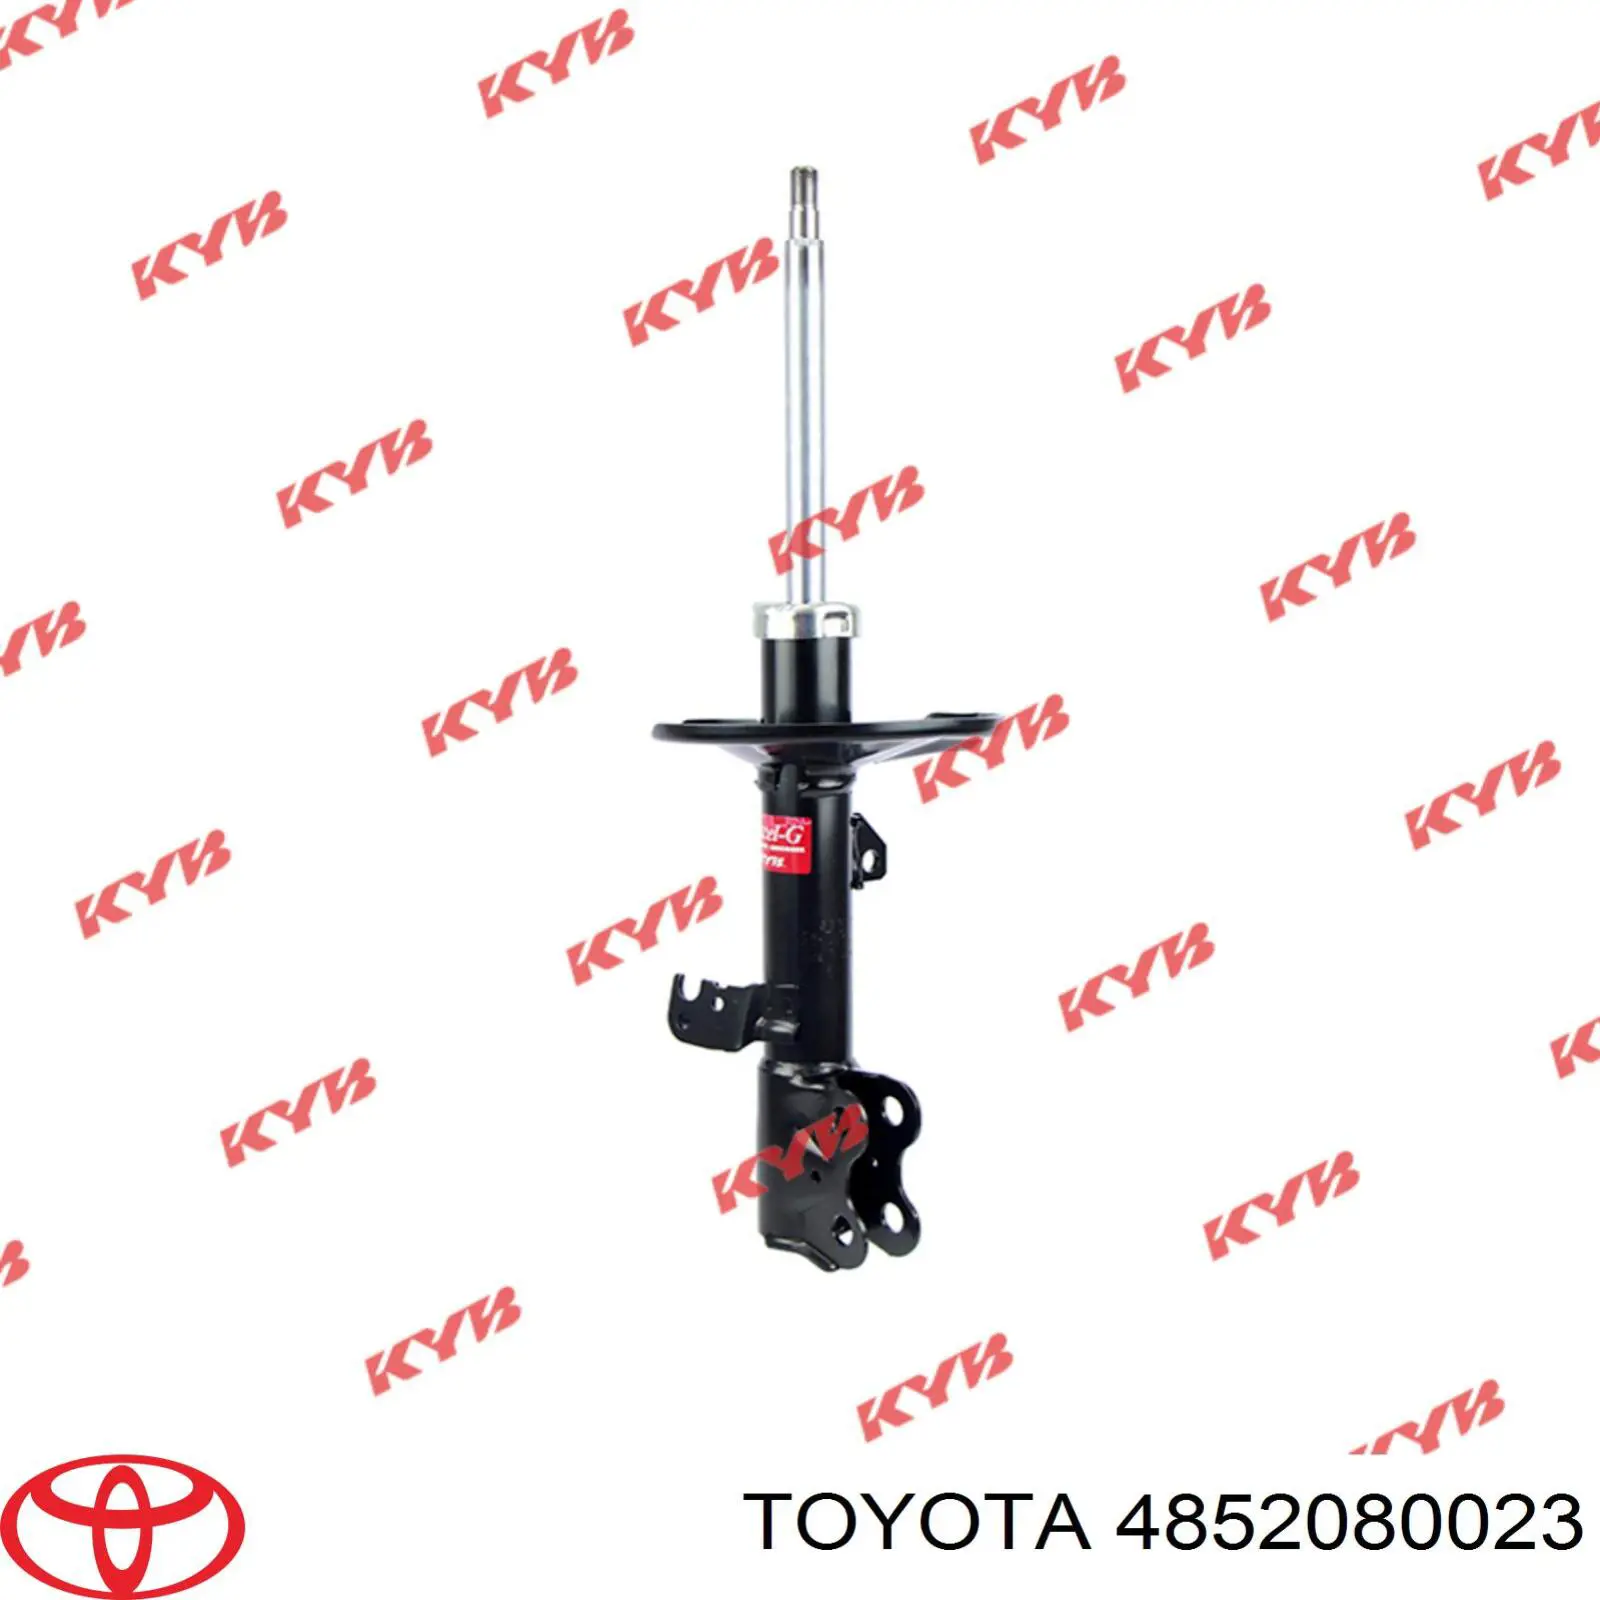 4852080023 Toyota